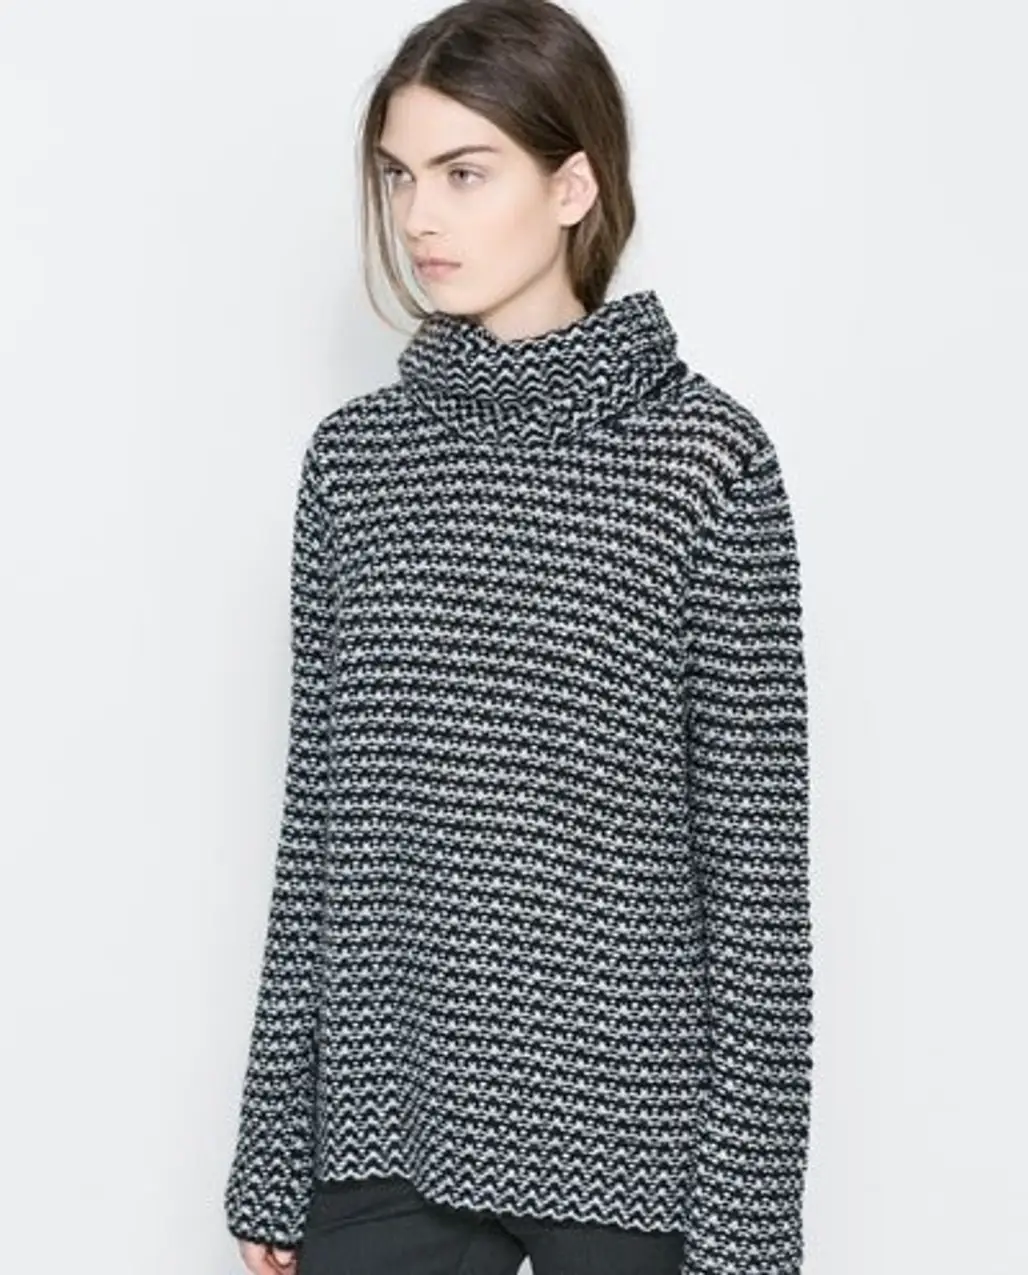 Zara – Sweater with Loose Turtleneck